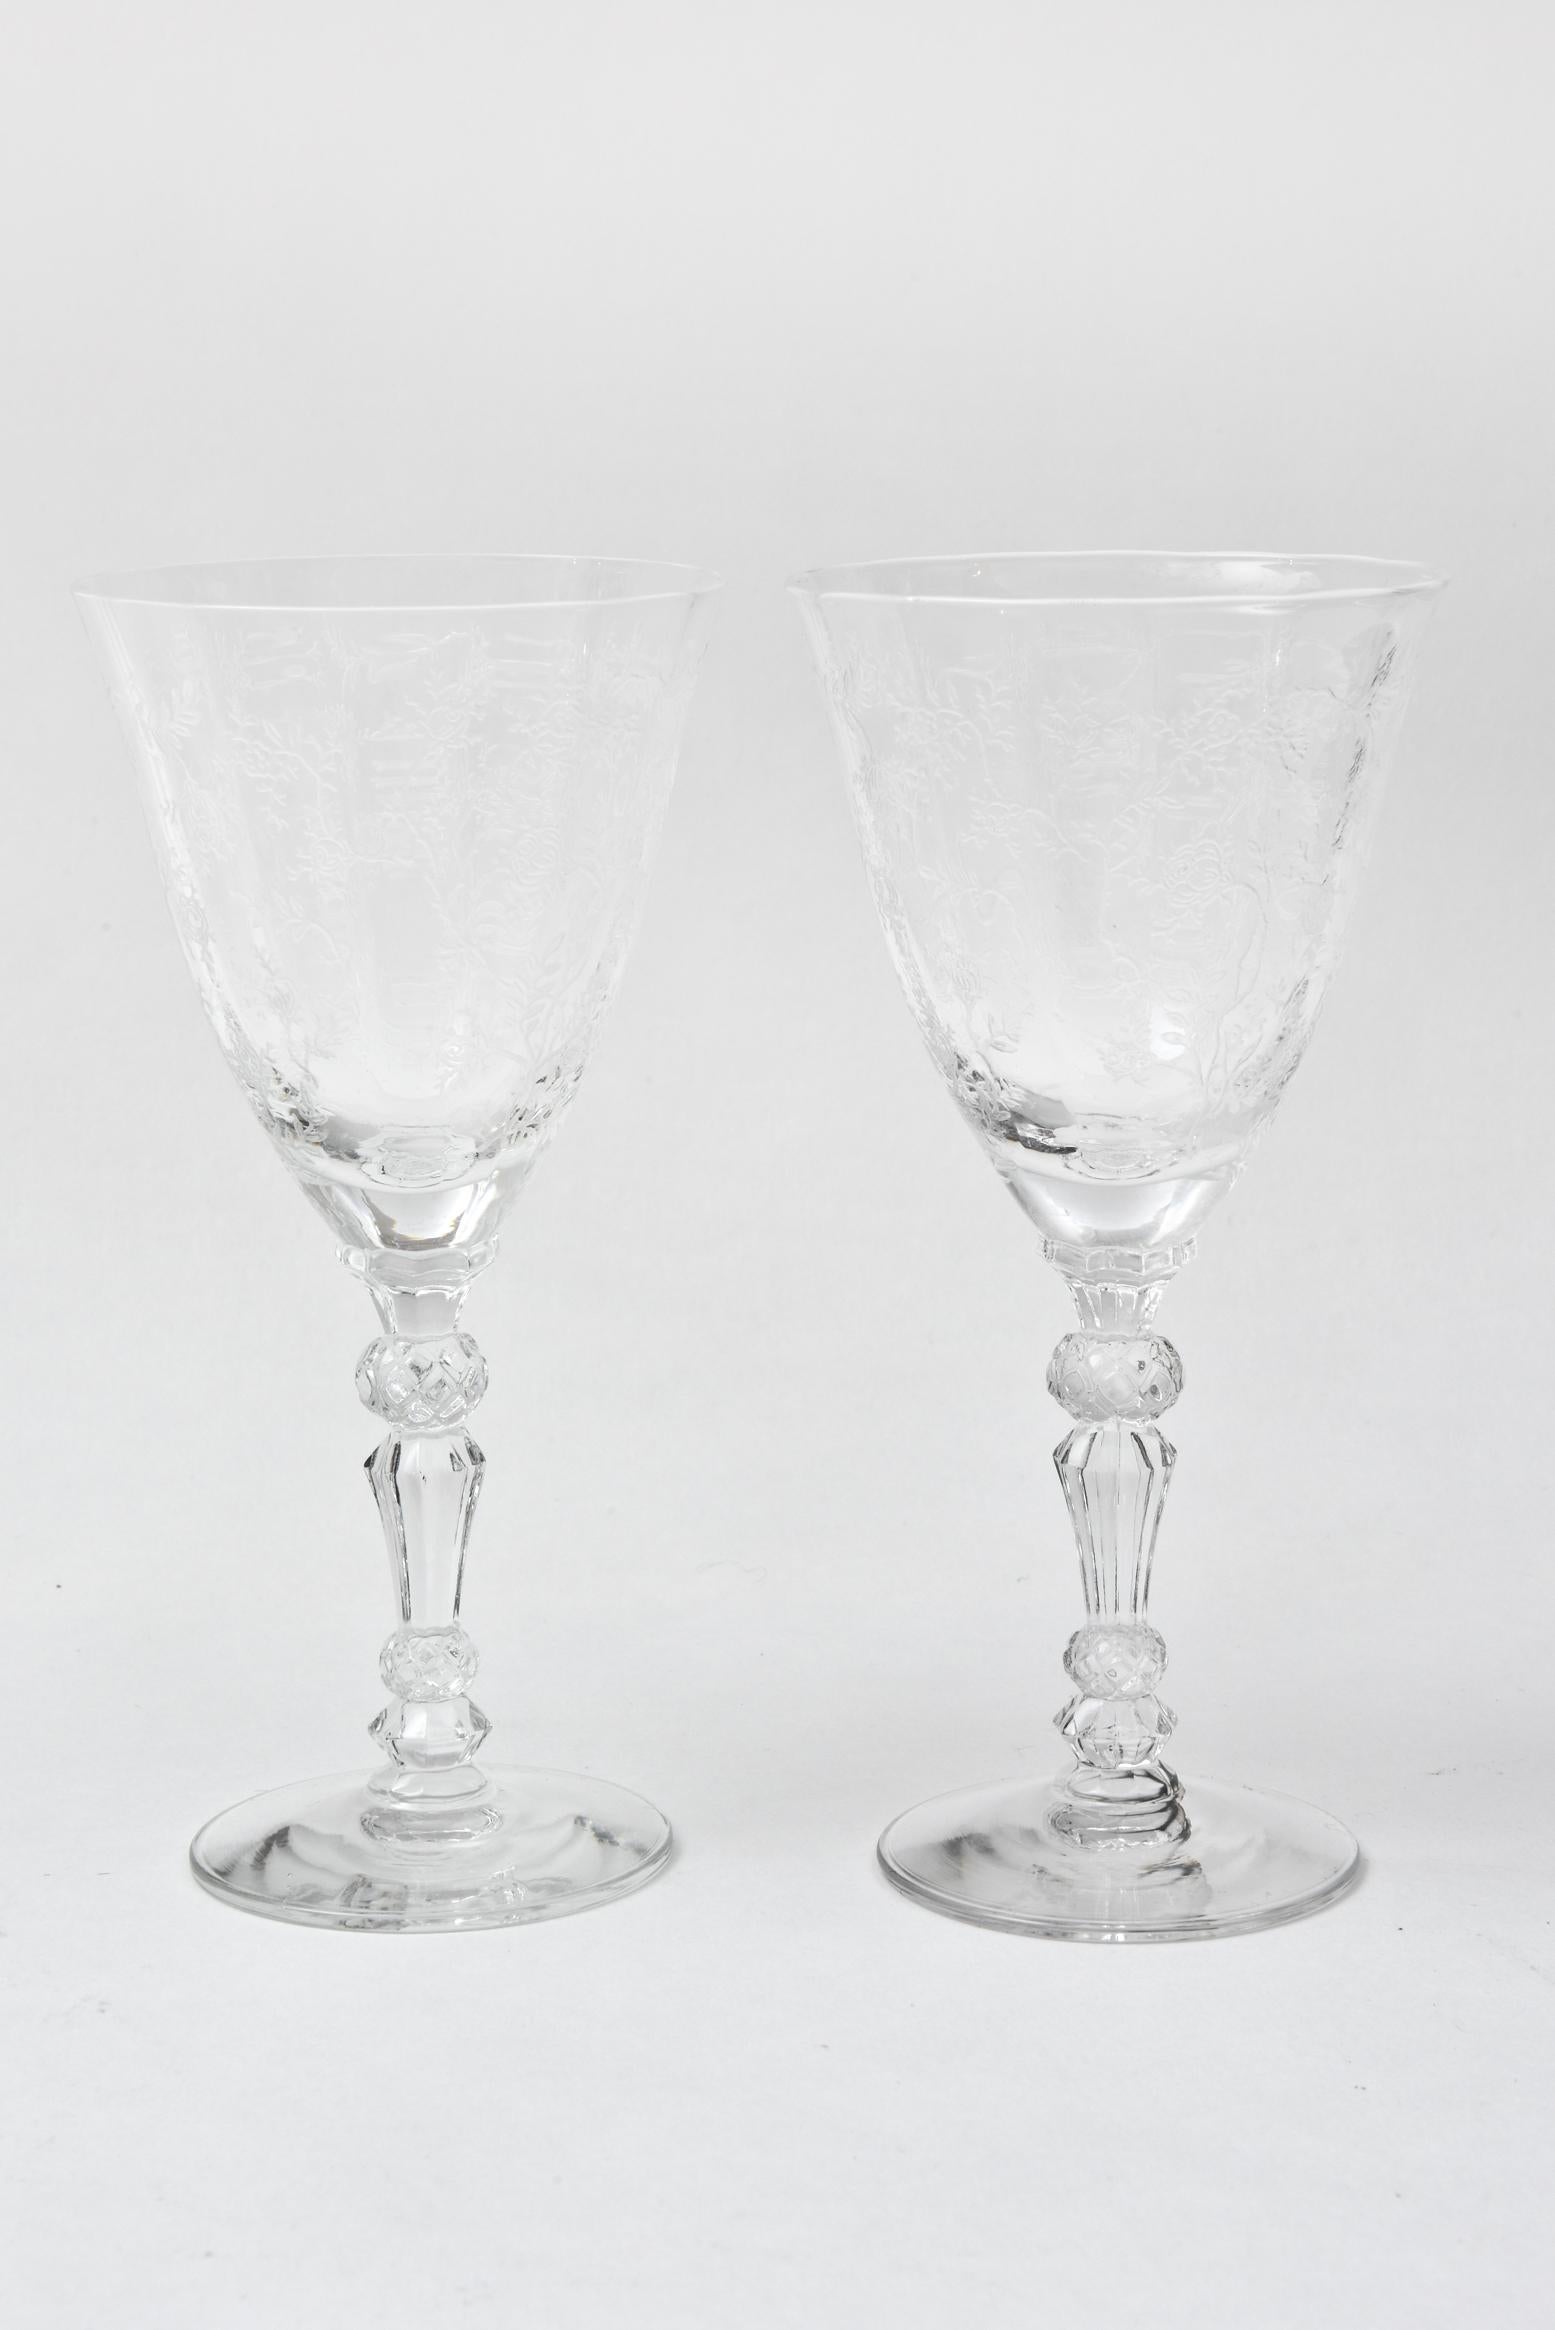 American Set of 12 Crystal Wine Glasses, Intricate Jeweled Stem Vintage